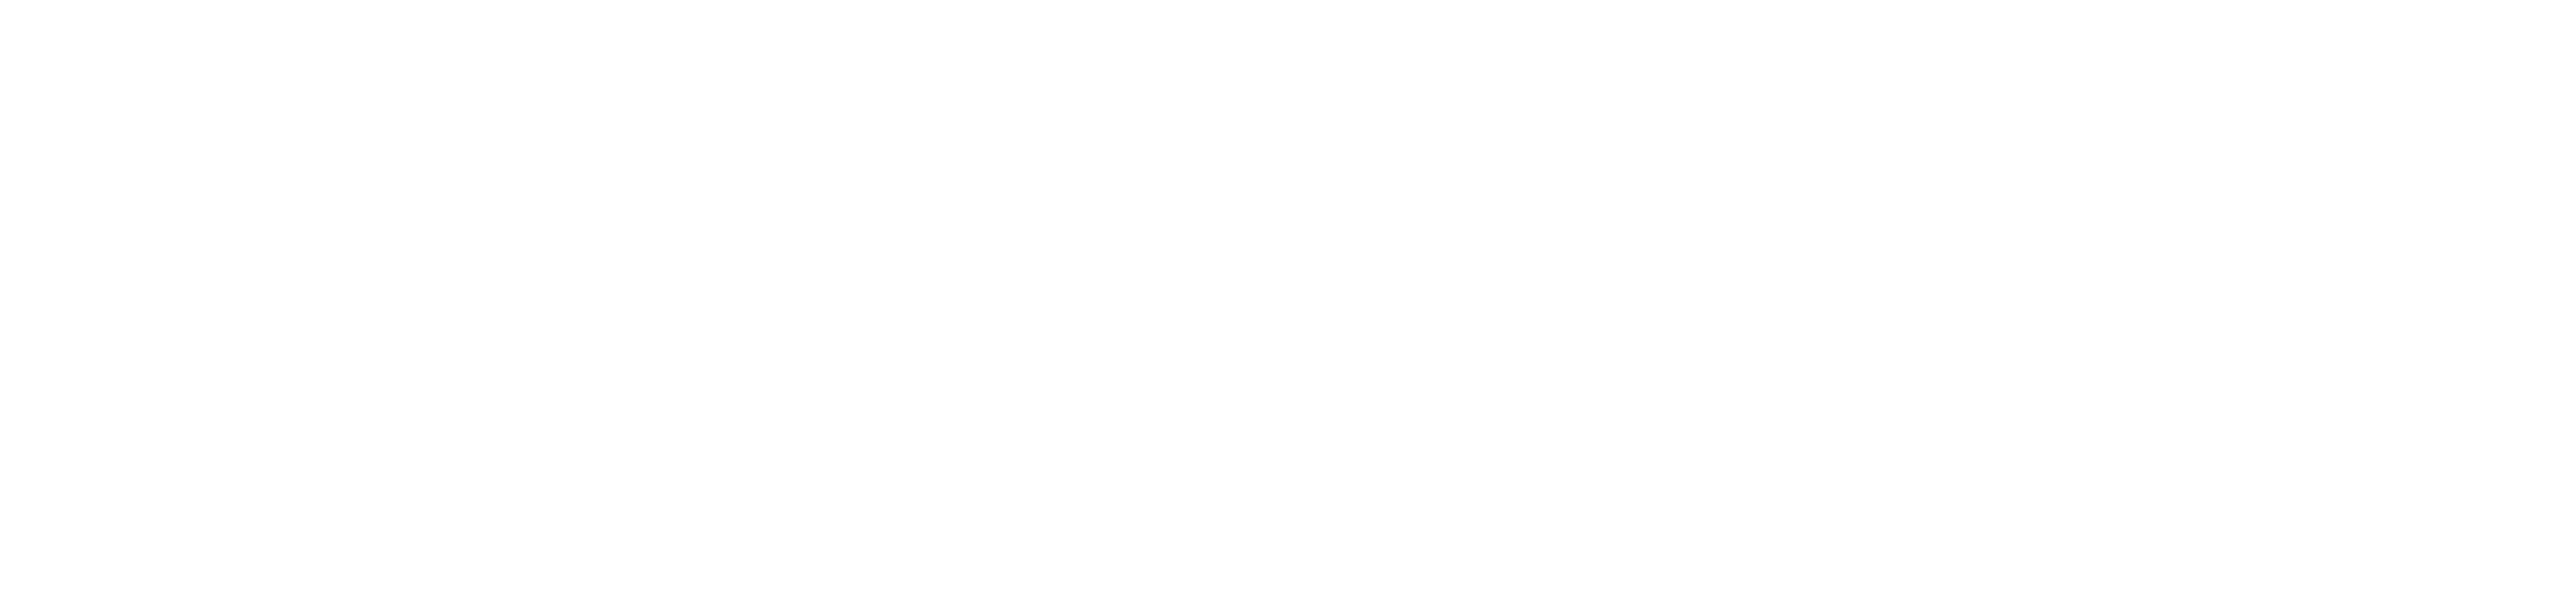 Lead Generation Service | B2B Growth Labs